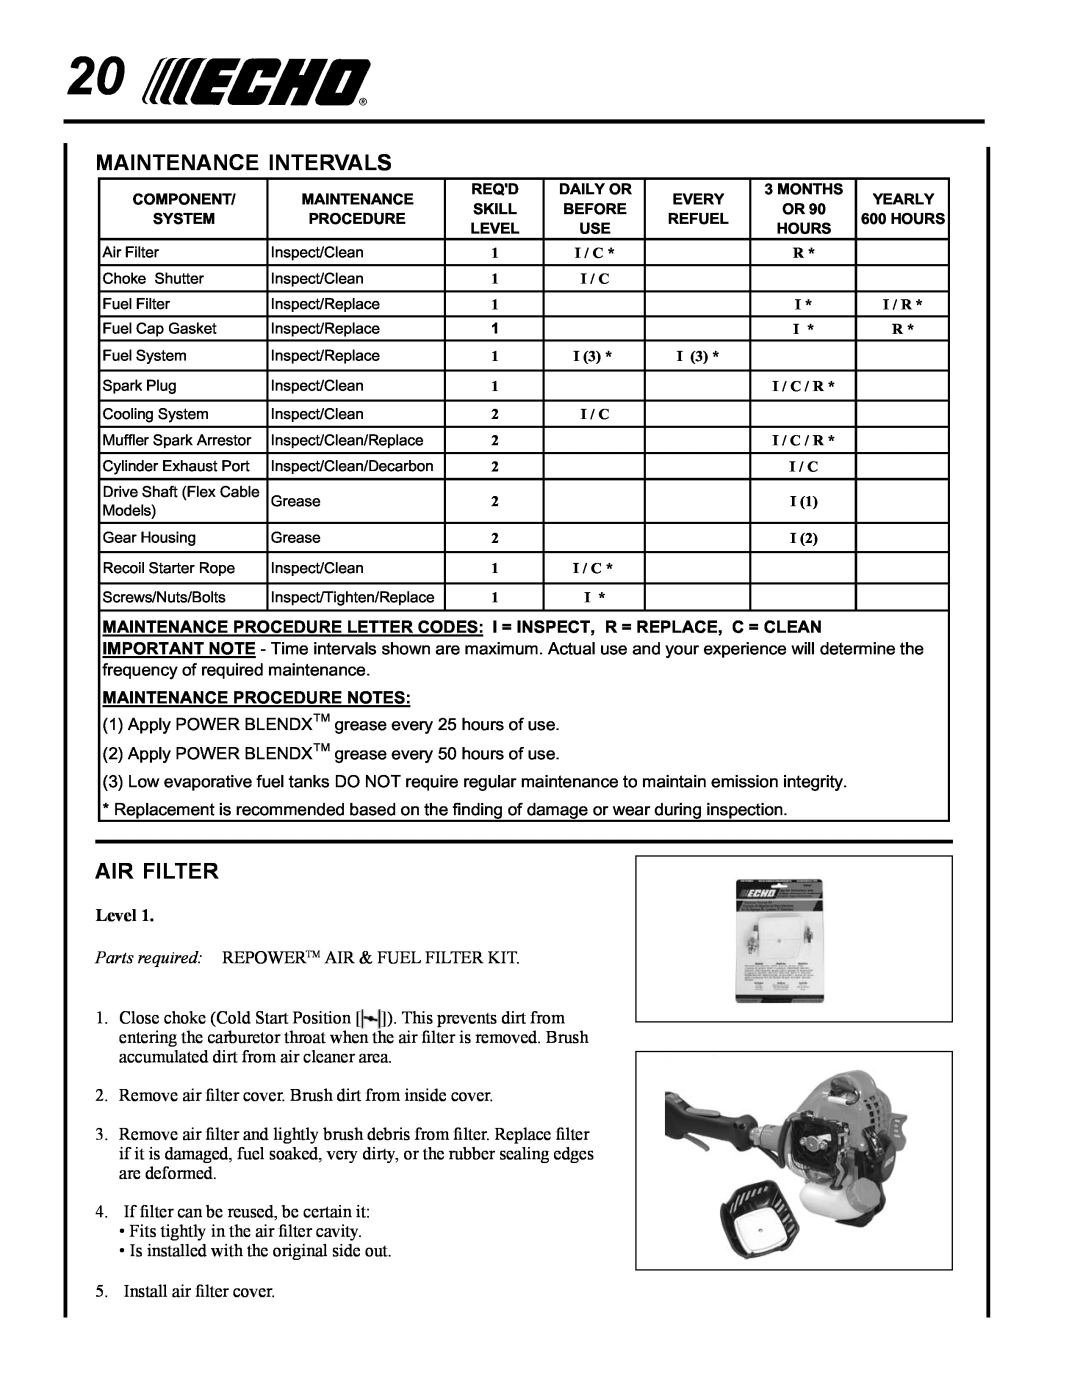 Echo PAS-225 manual maintenance intervals, air filter, Maintenance Procedure Notes, Level 